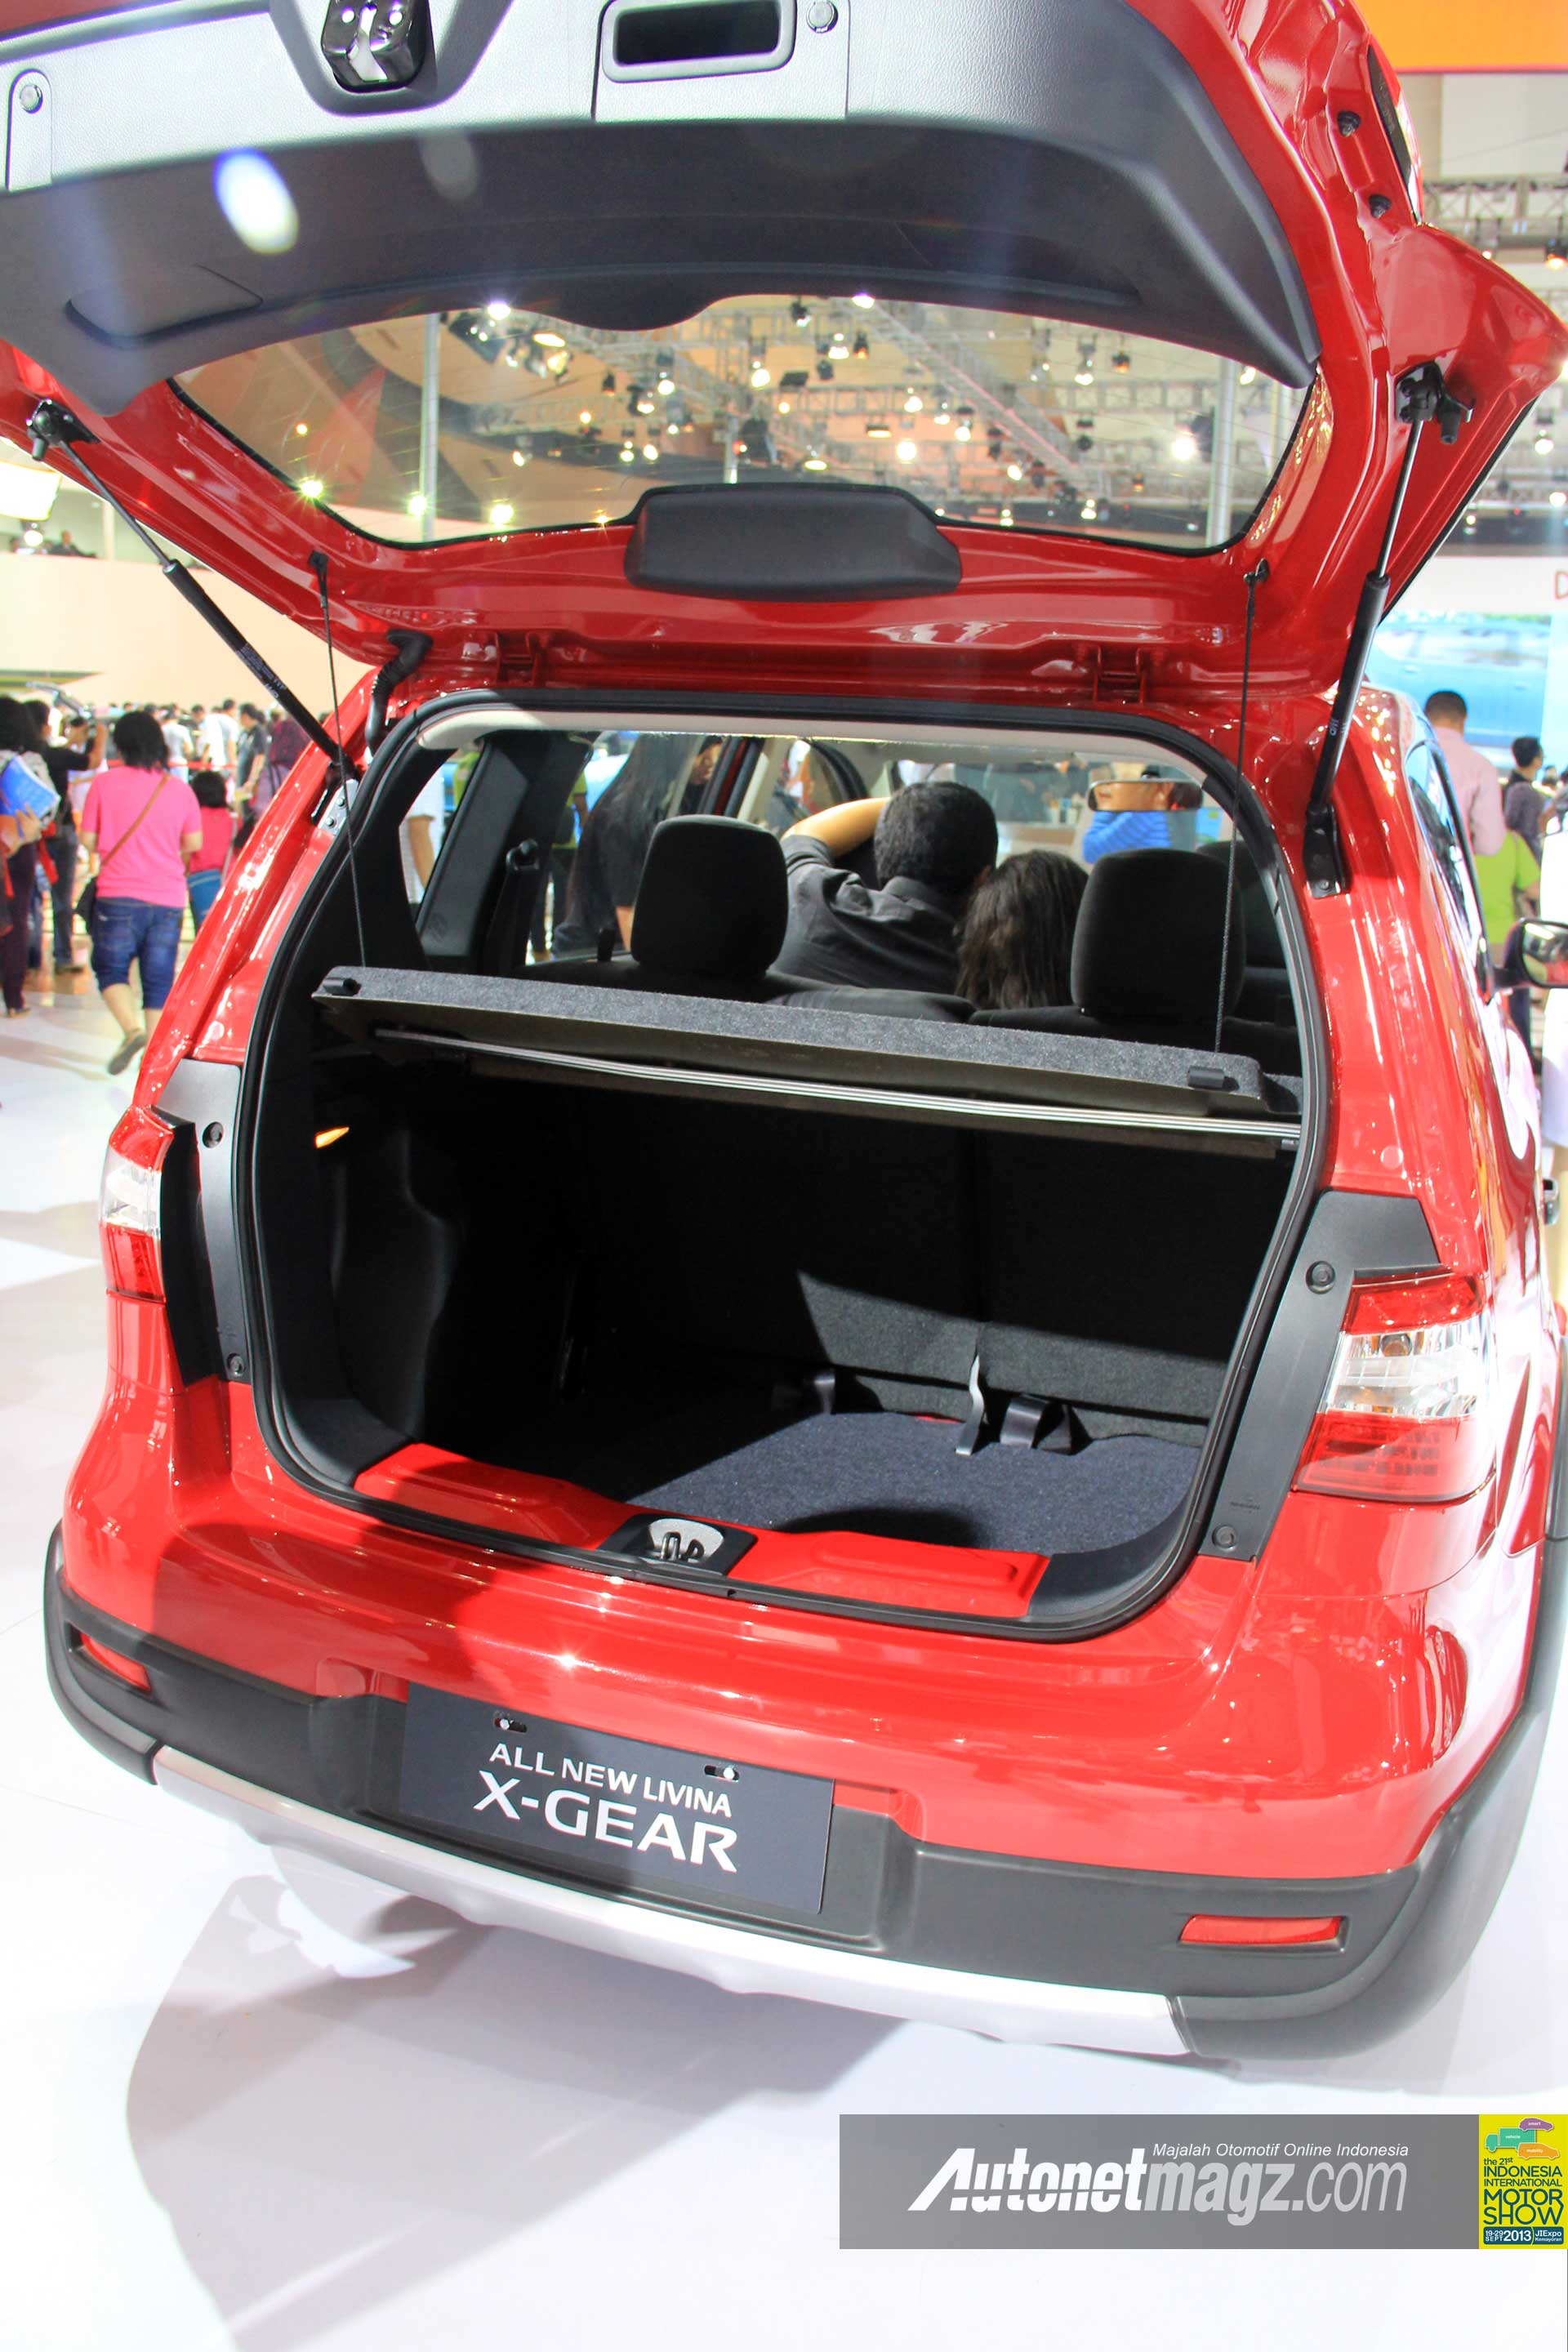 IIMS 2013, bagasi luas Nissan All-new Livina X-Gear: Kembalinya Nissan Livina X-Gear Facelift di IIMS 2013